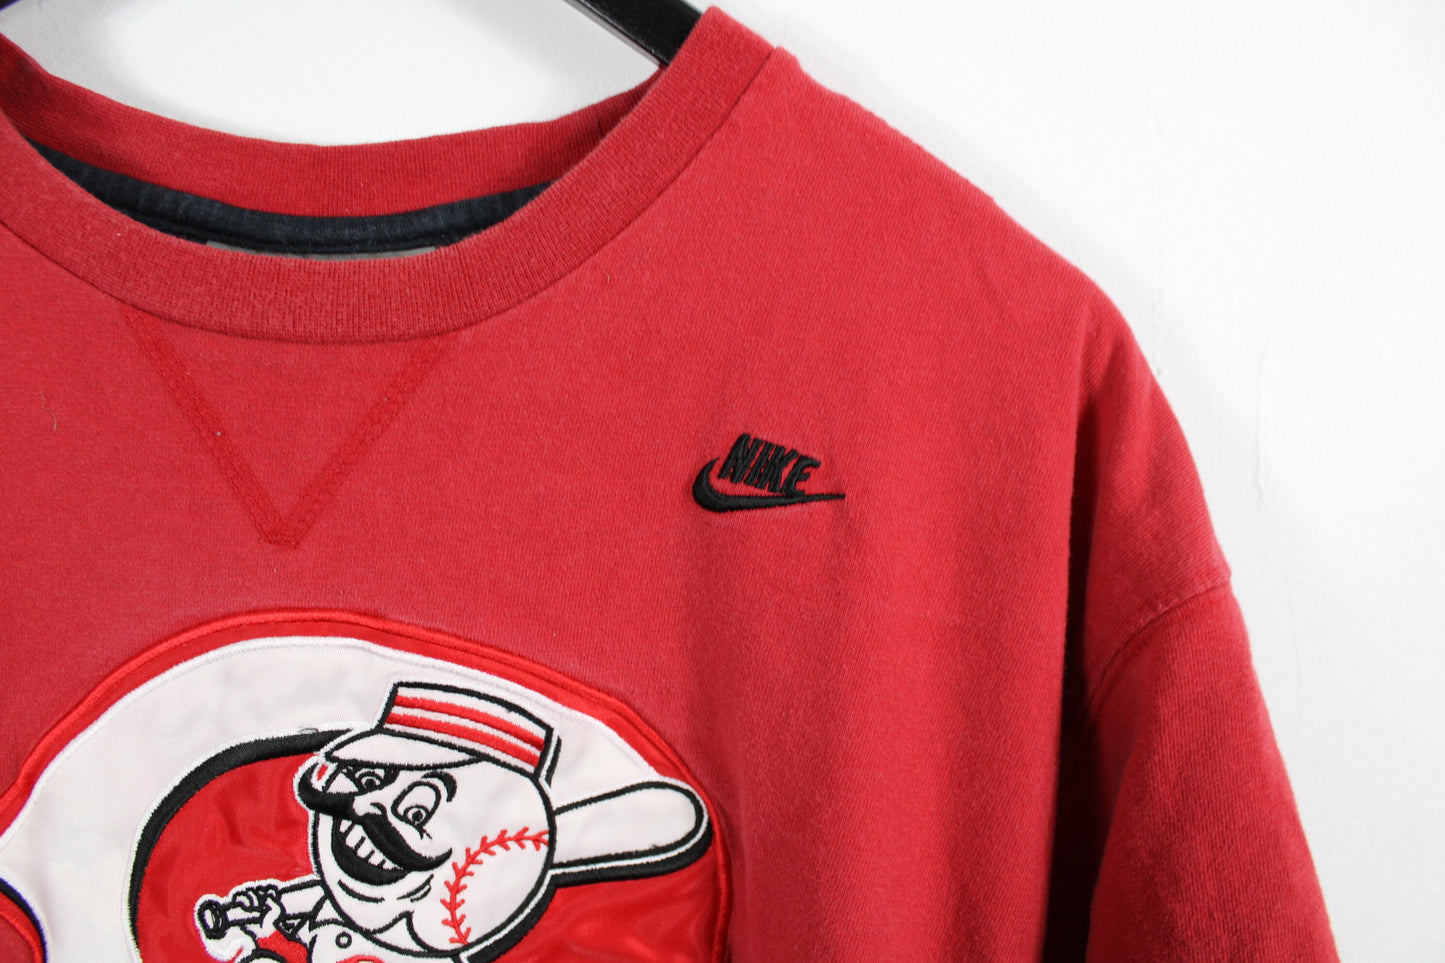 World Series T-Shirt / Cincinnati Reds MLB Baseball Tee Shirt / 90s Vintage Sports Team Graphic Promo